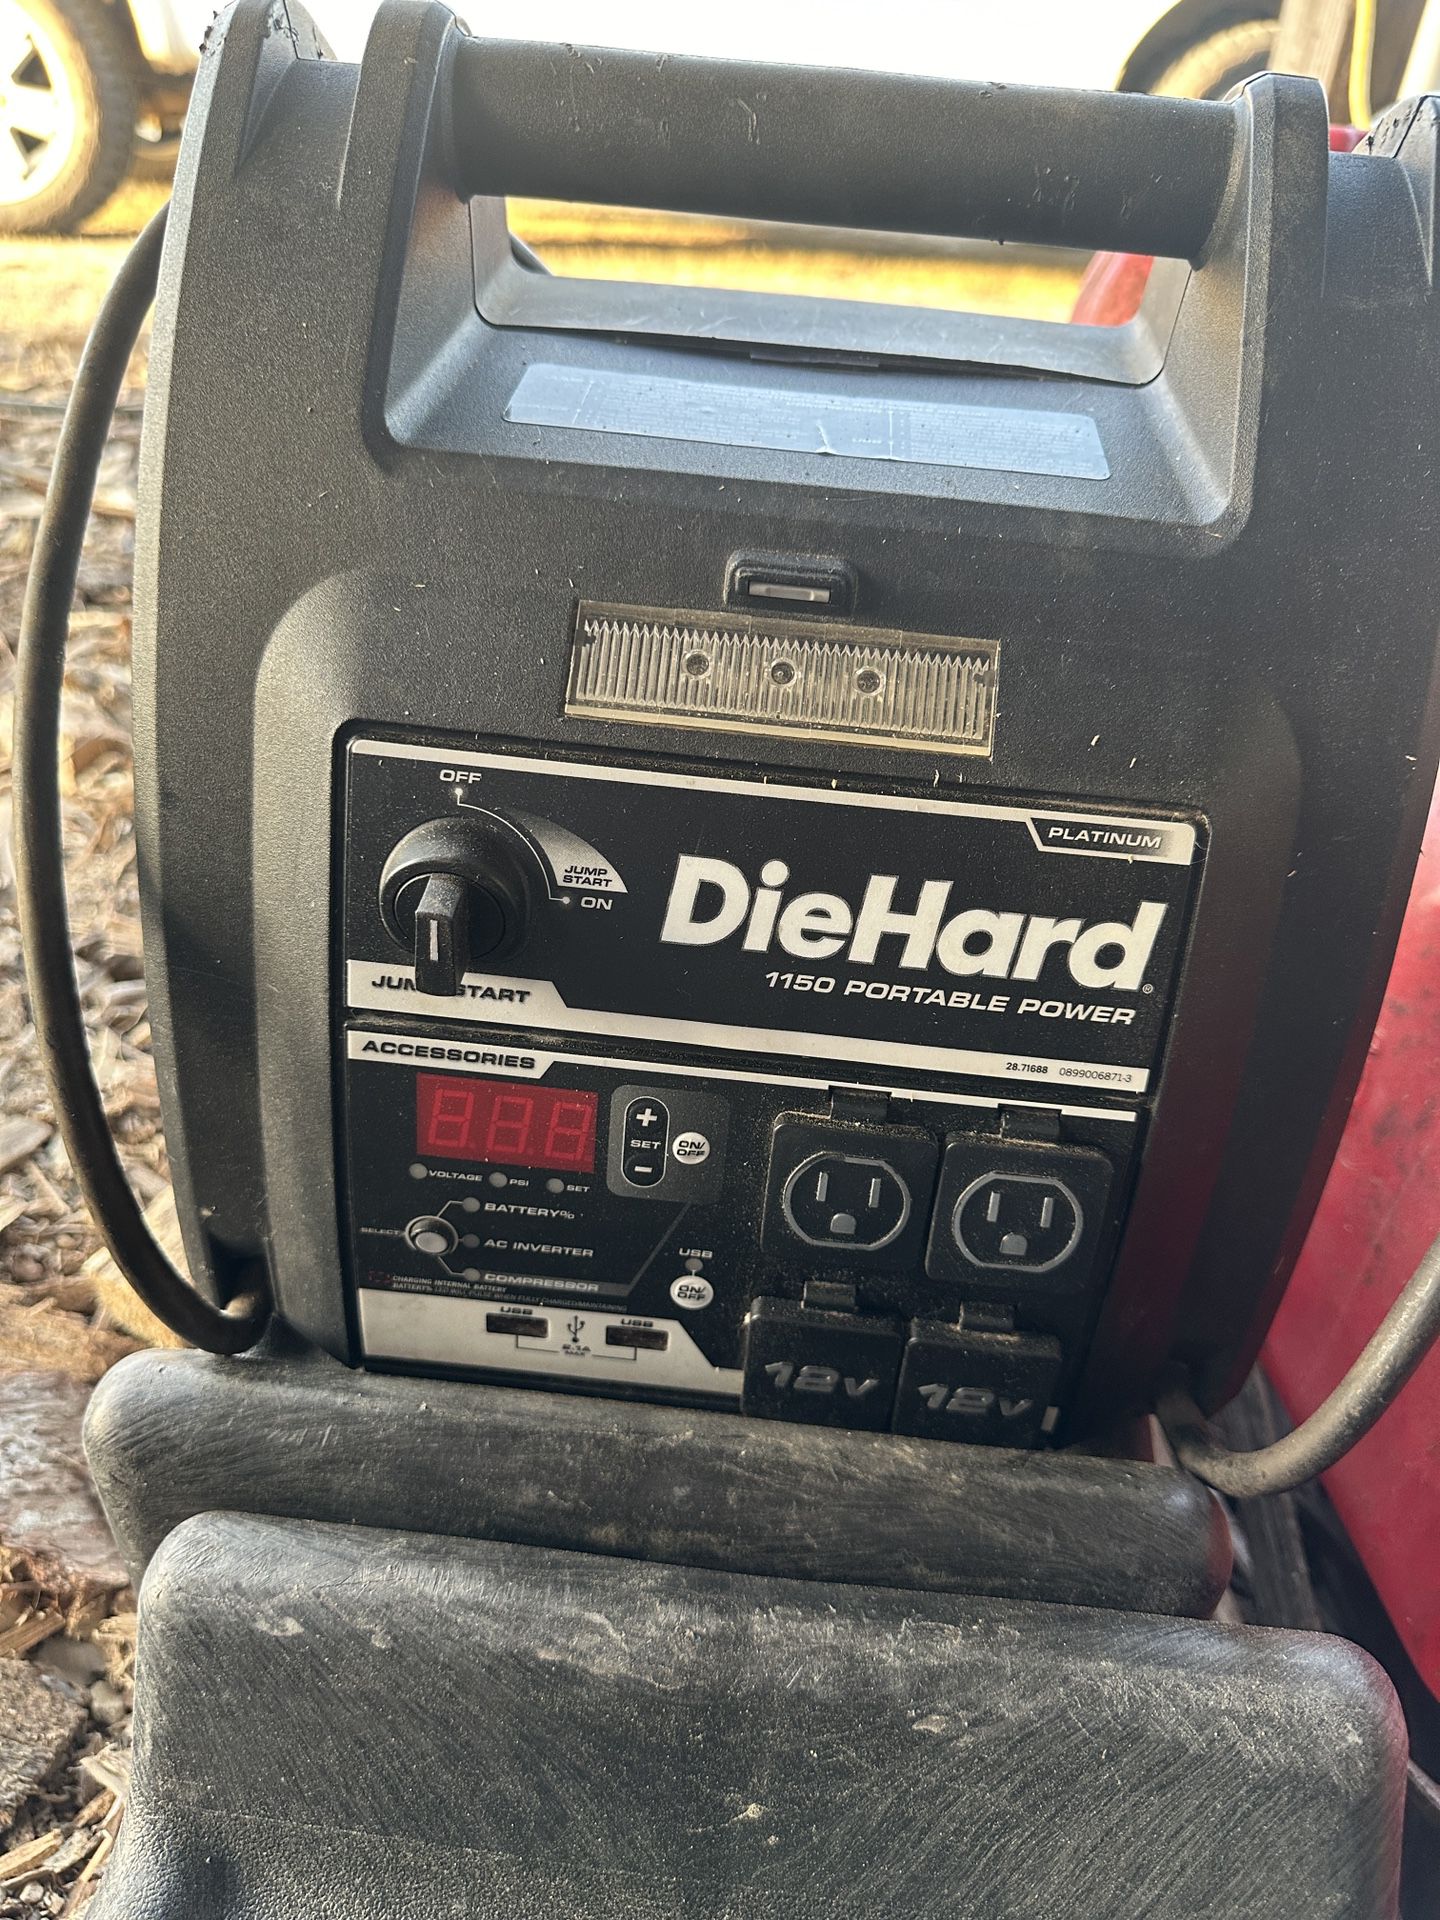 diehard platinum portable power 1150